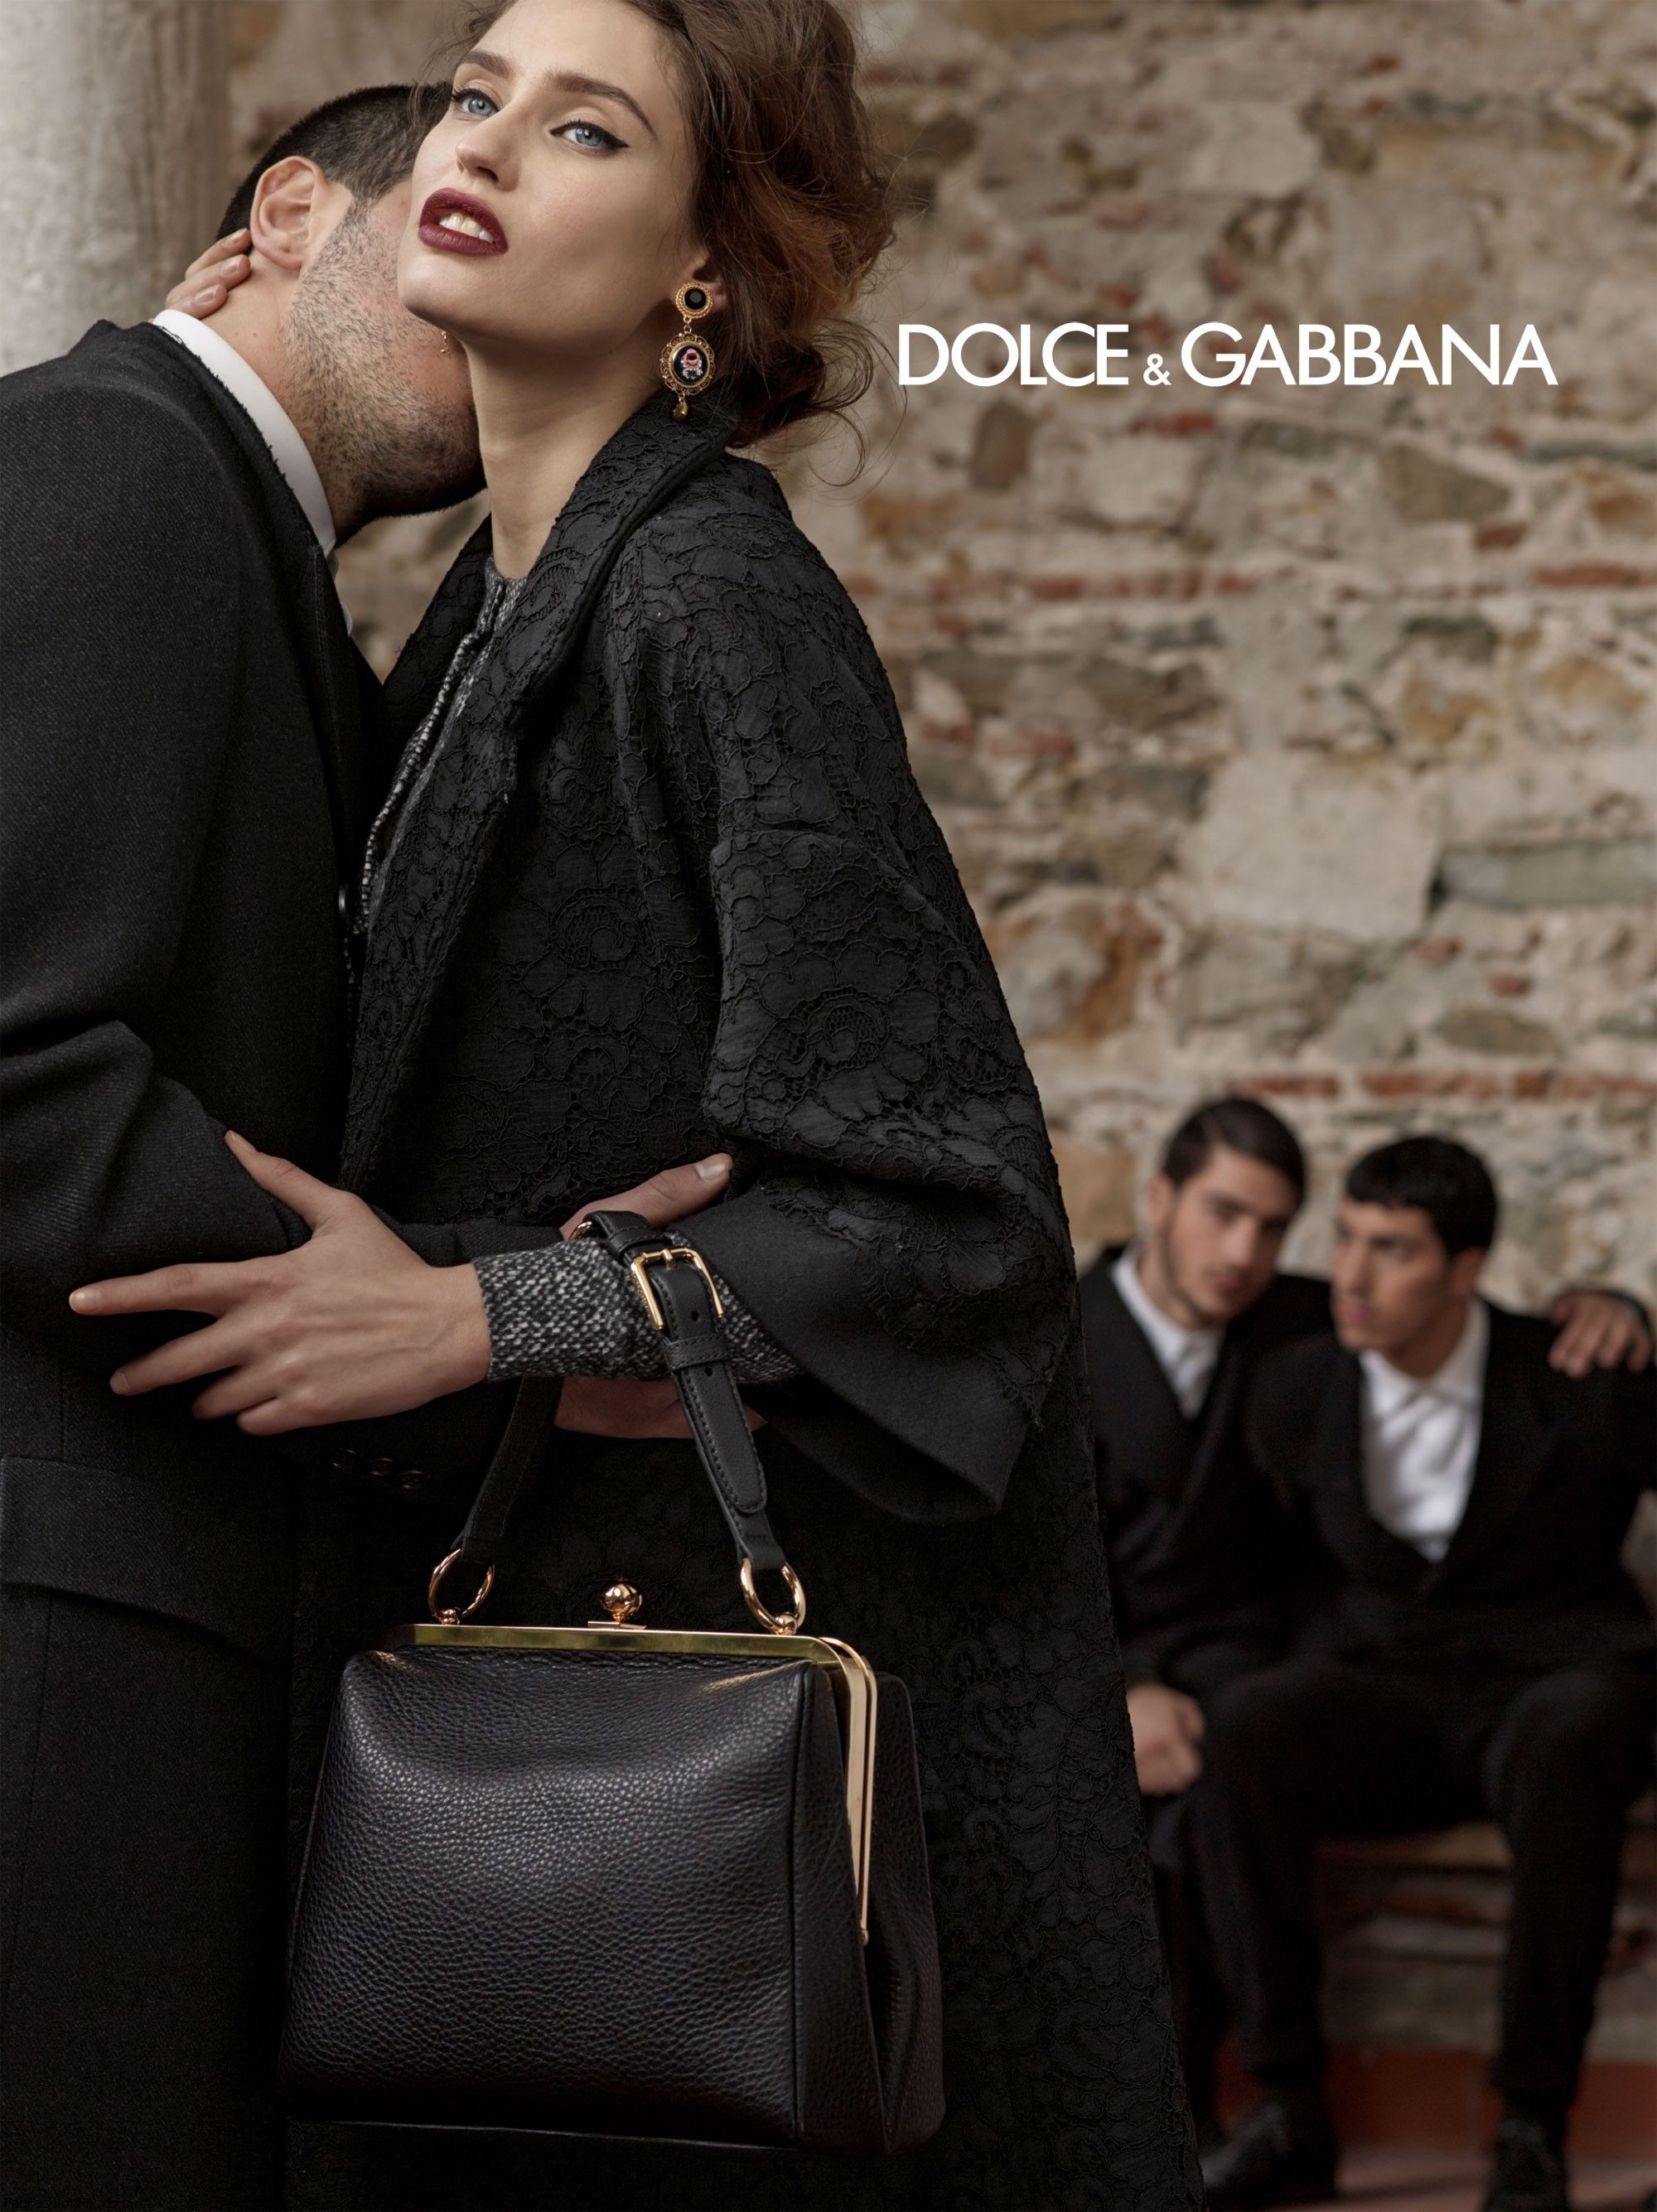 Реклама dolce gabbana. Сицилийская вдова Dolce Gabbana Бьянка Балти. Dolce Gabbana 2021 Бьянка Балти.